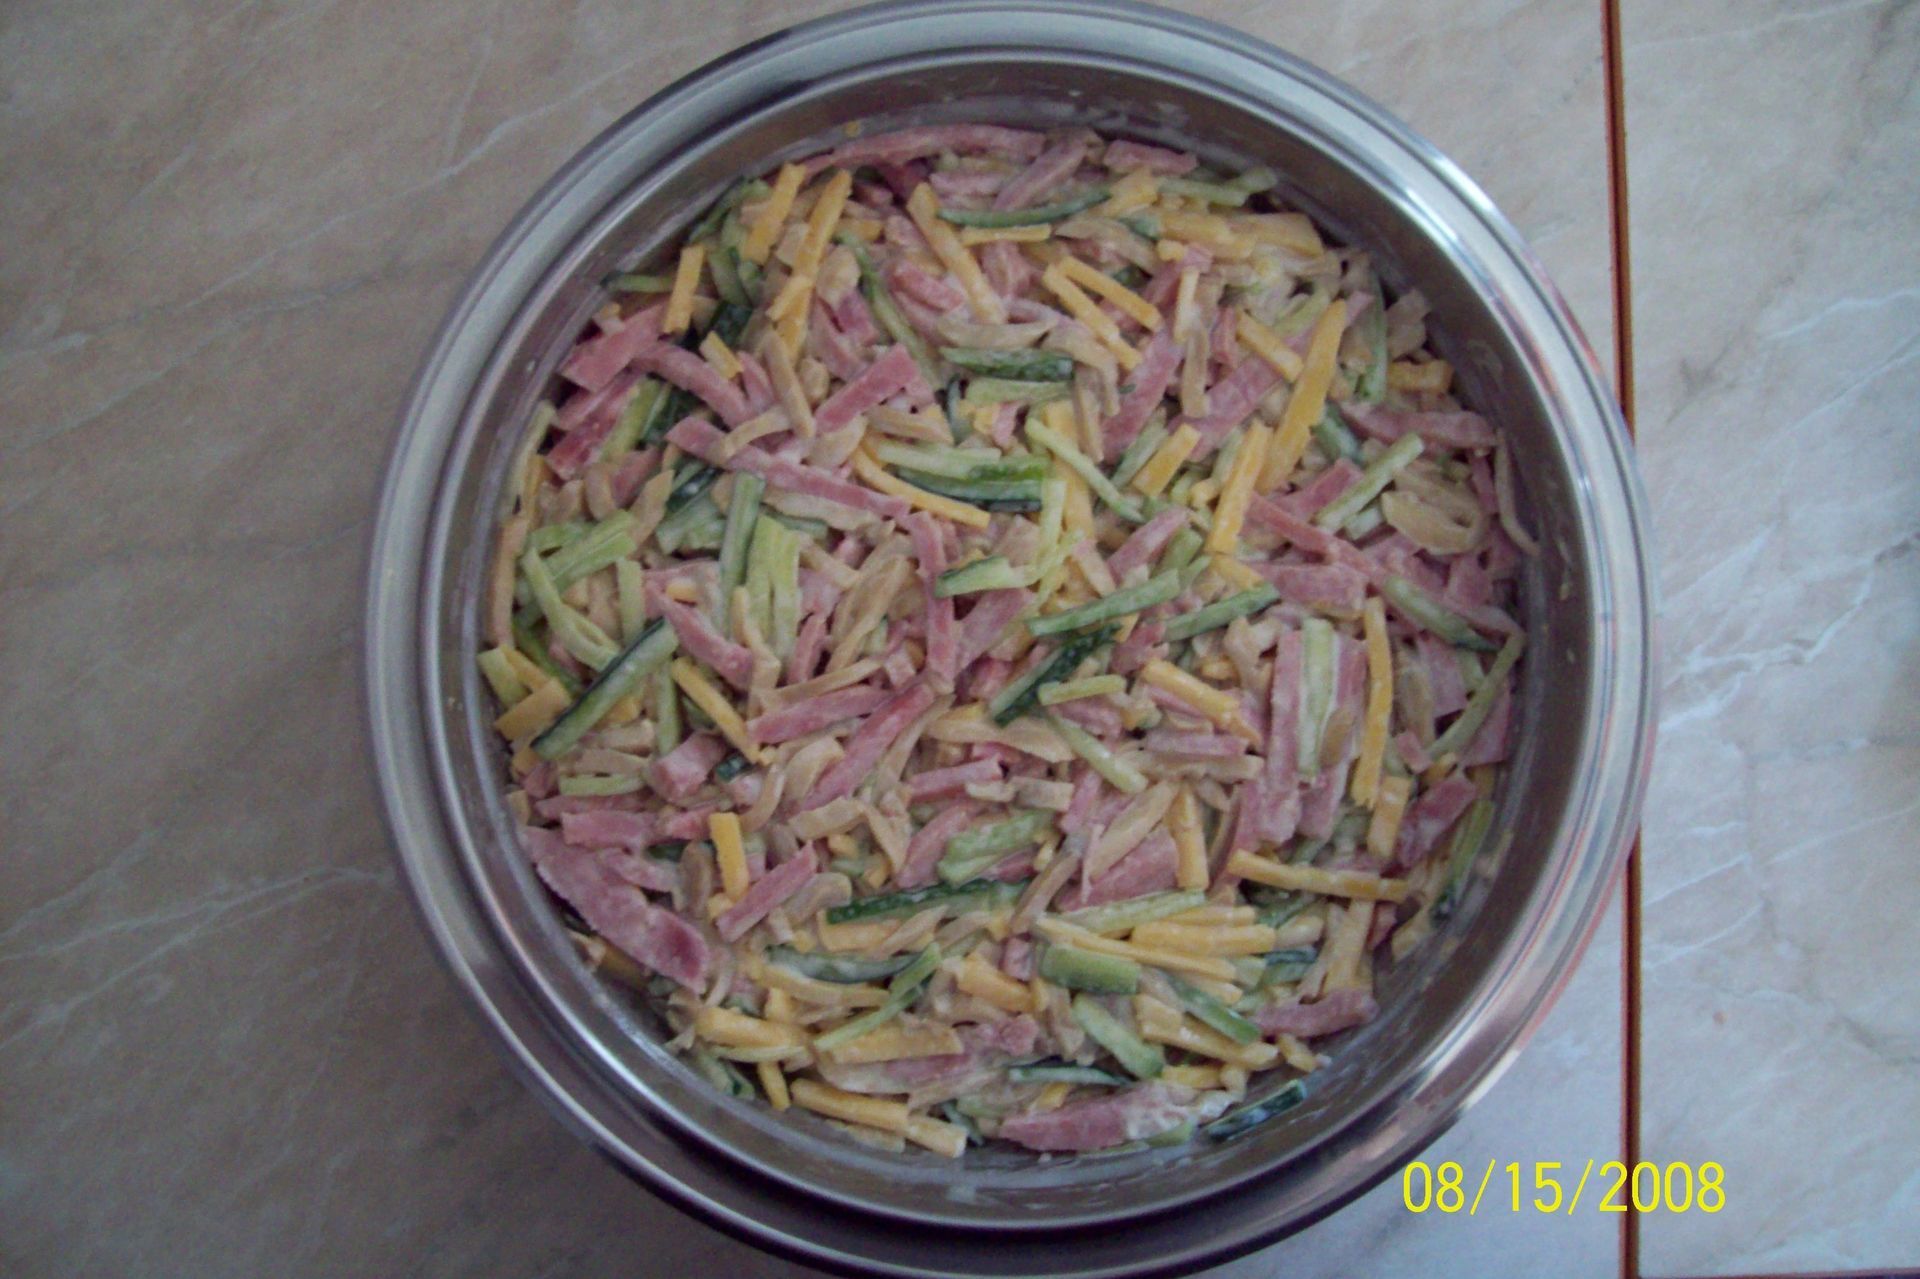 Салат листопад рецепт с фото